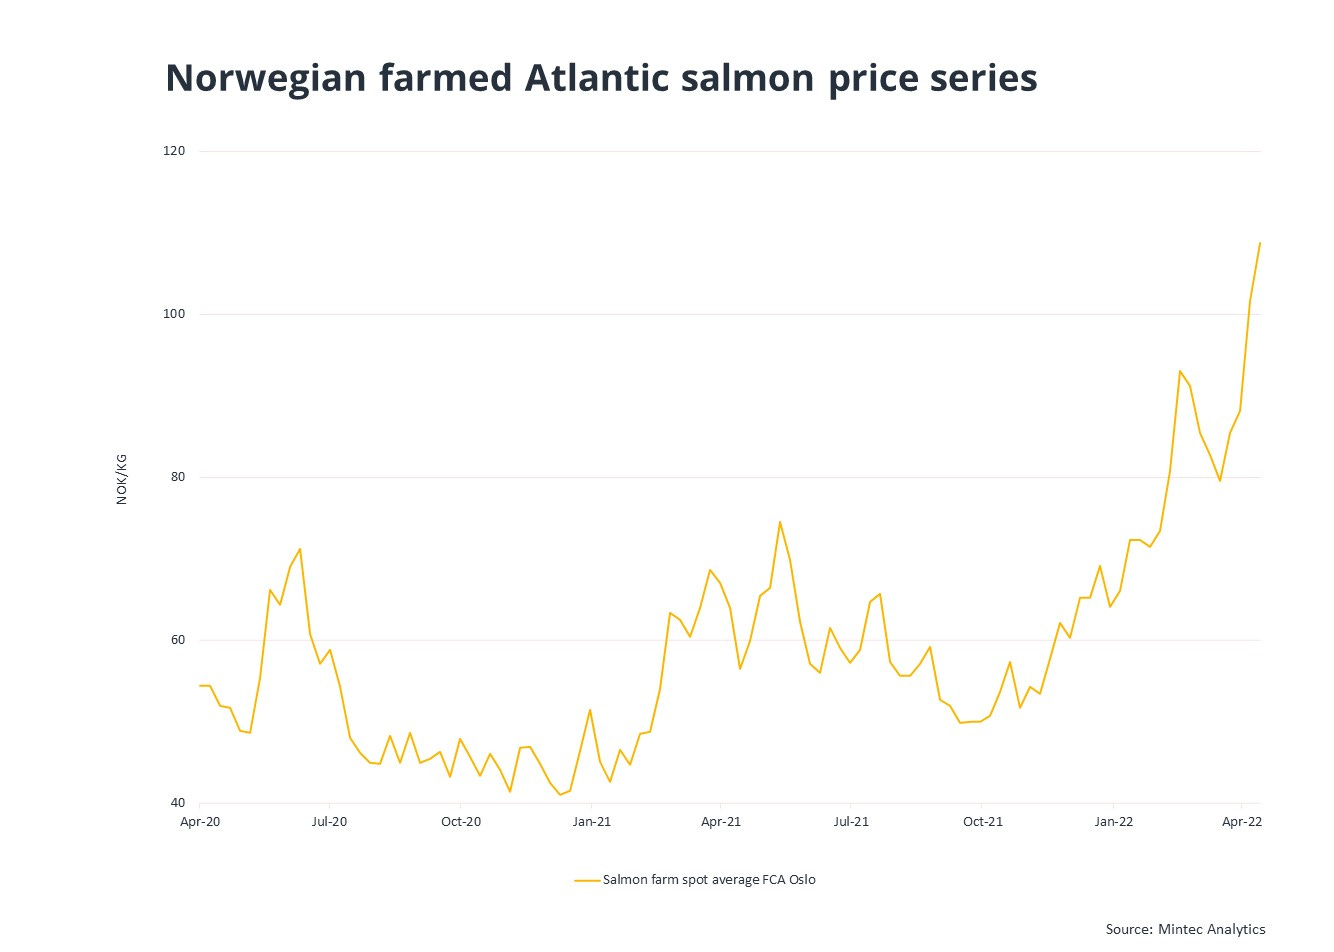 Norwegian farmed salmon price reaches record high in April